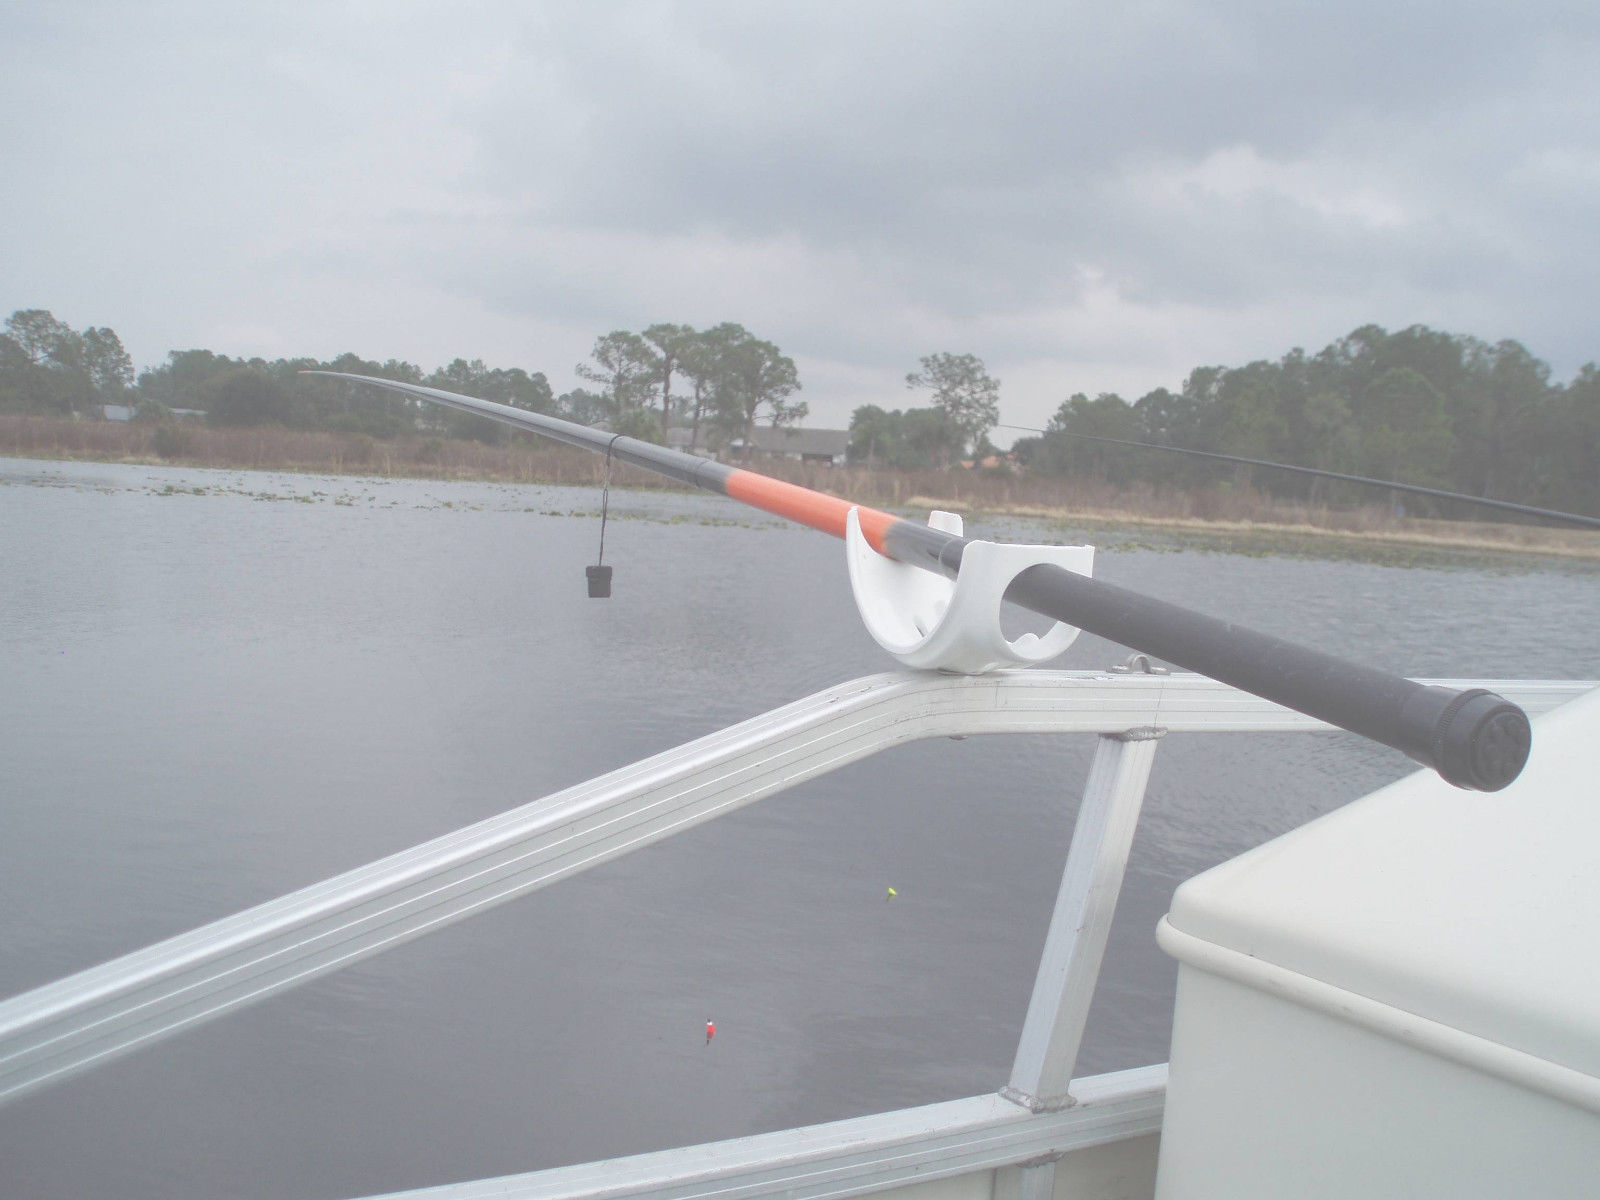 Katydid Single Bay Spider Fishing Rod Holders for Pontoons, Boats or Docks